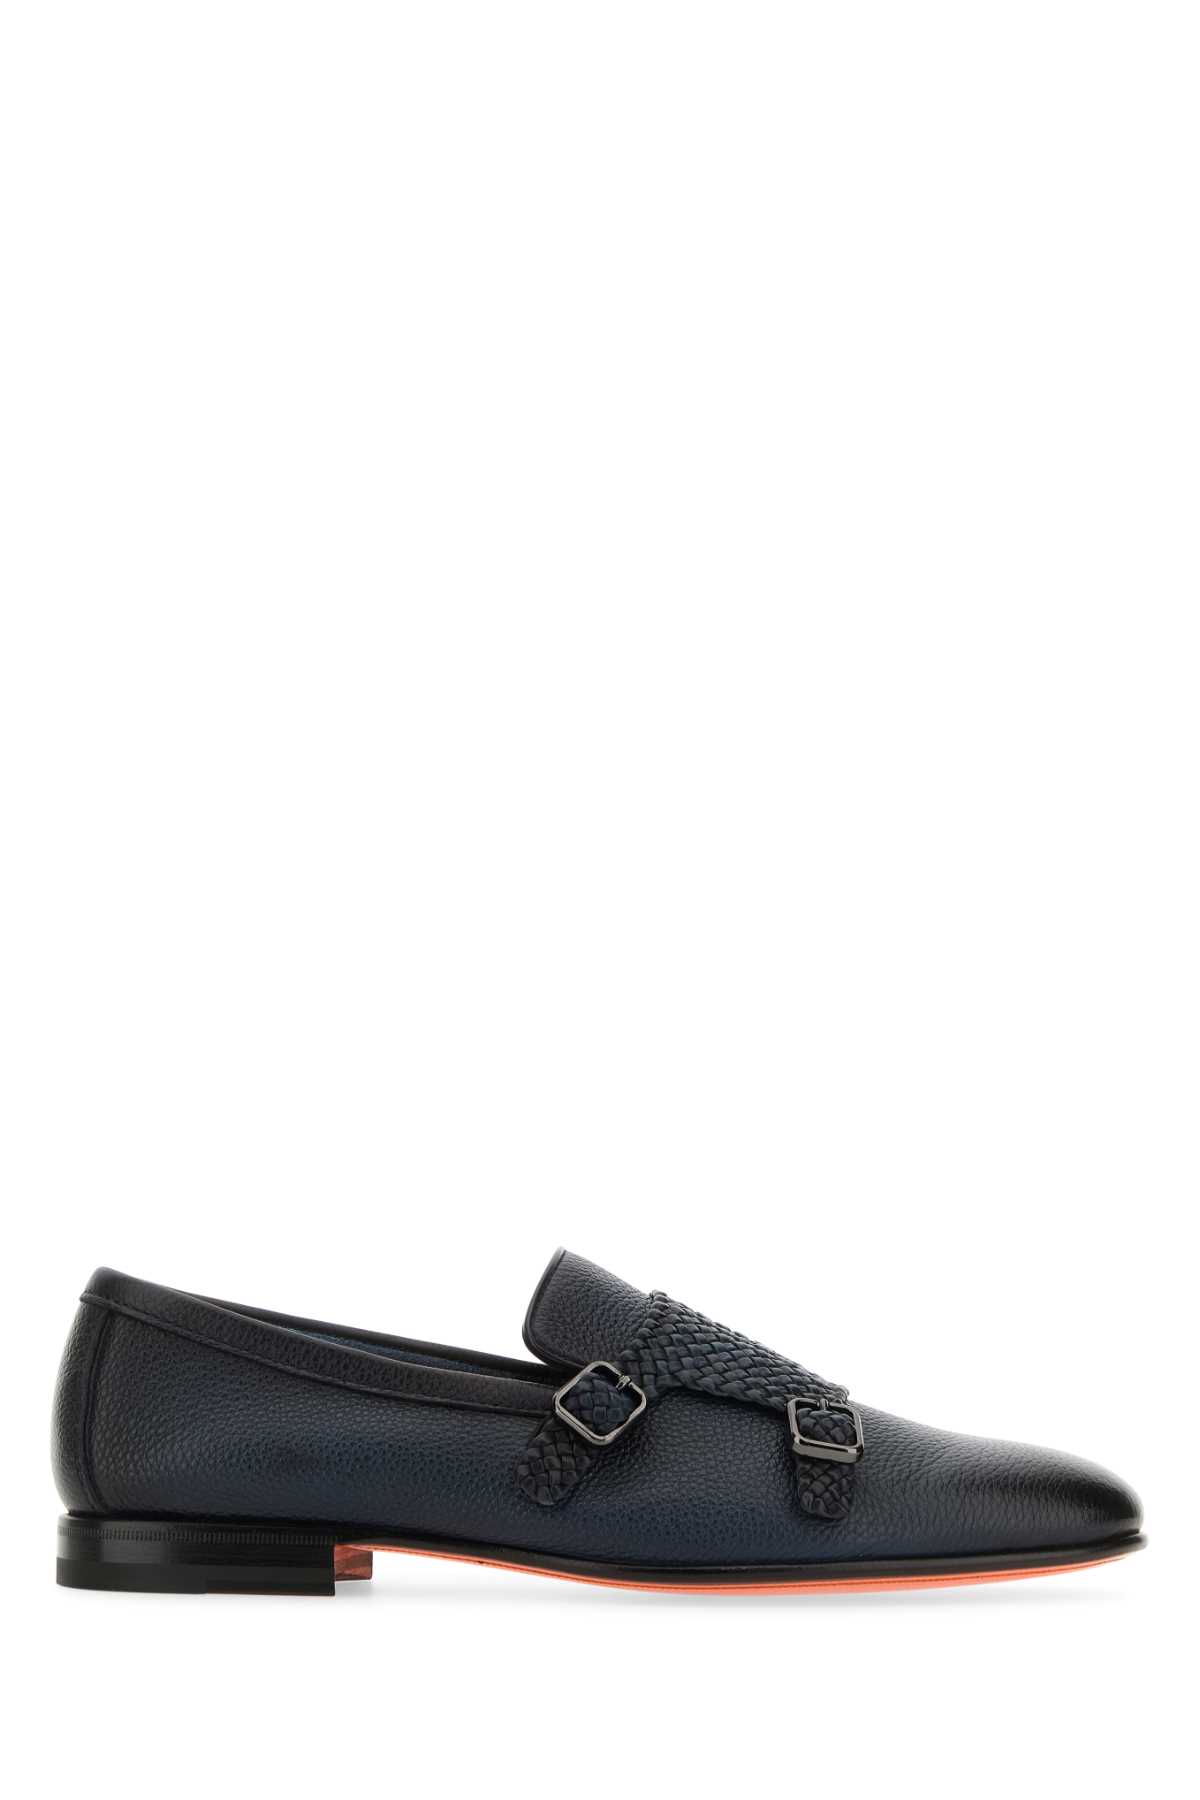 Shop Santoni Dark Blue Leather Carlos Monk Strap Shoes